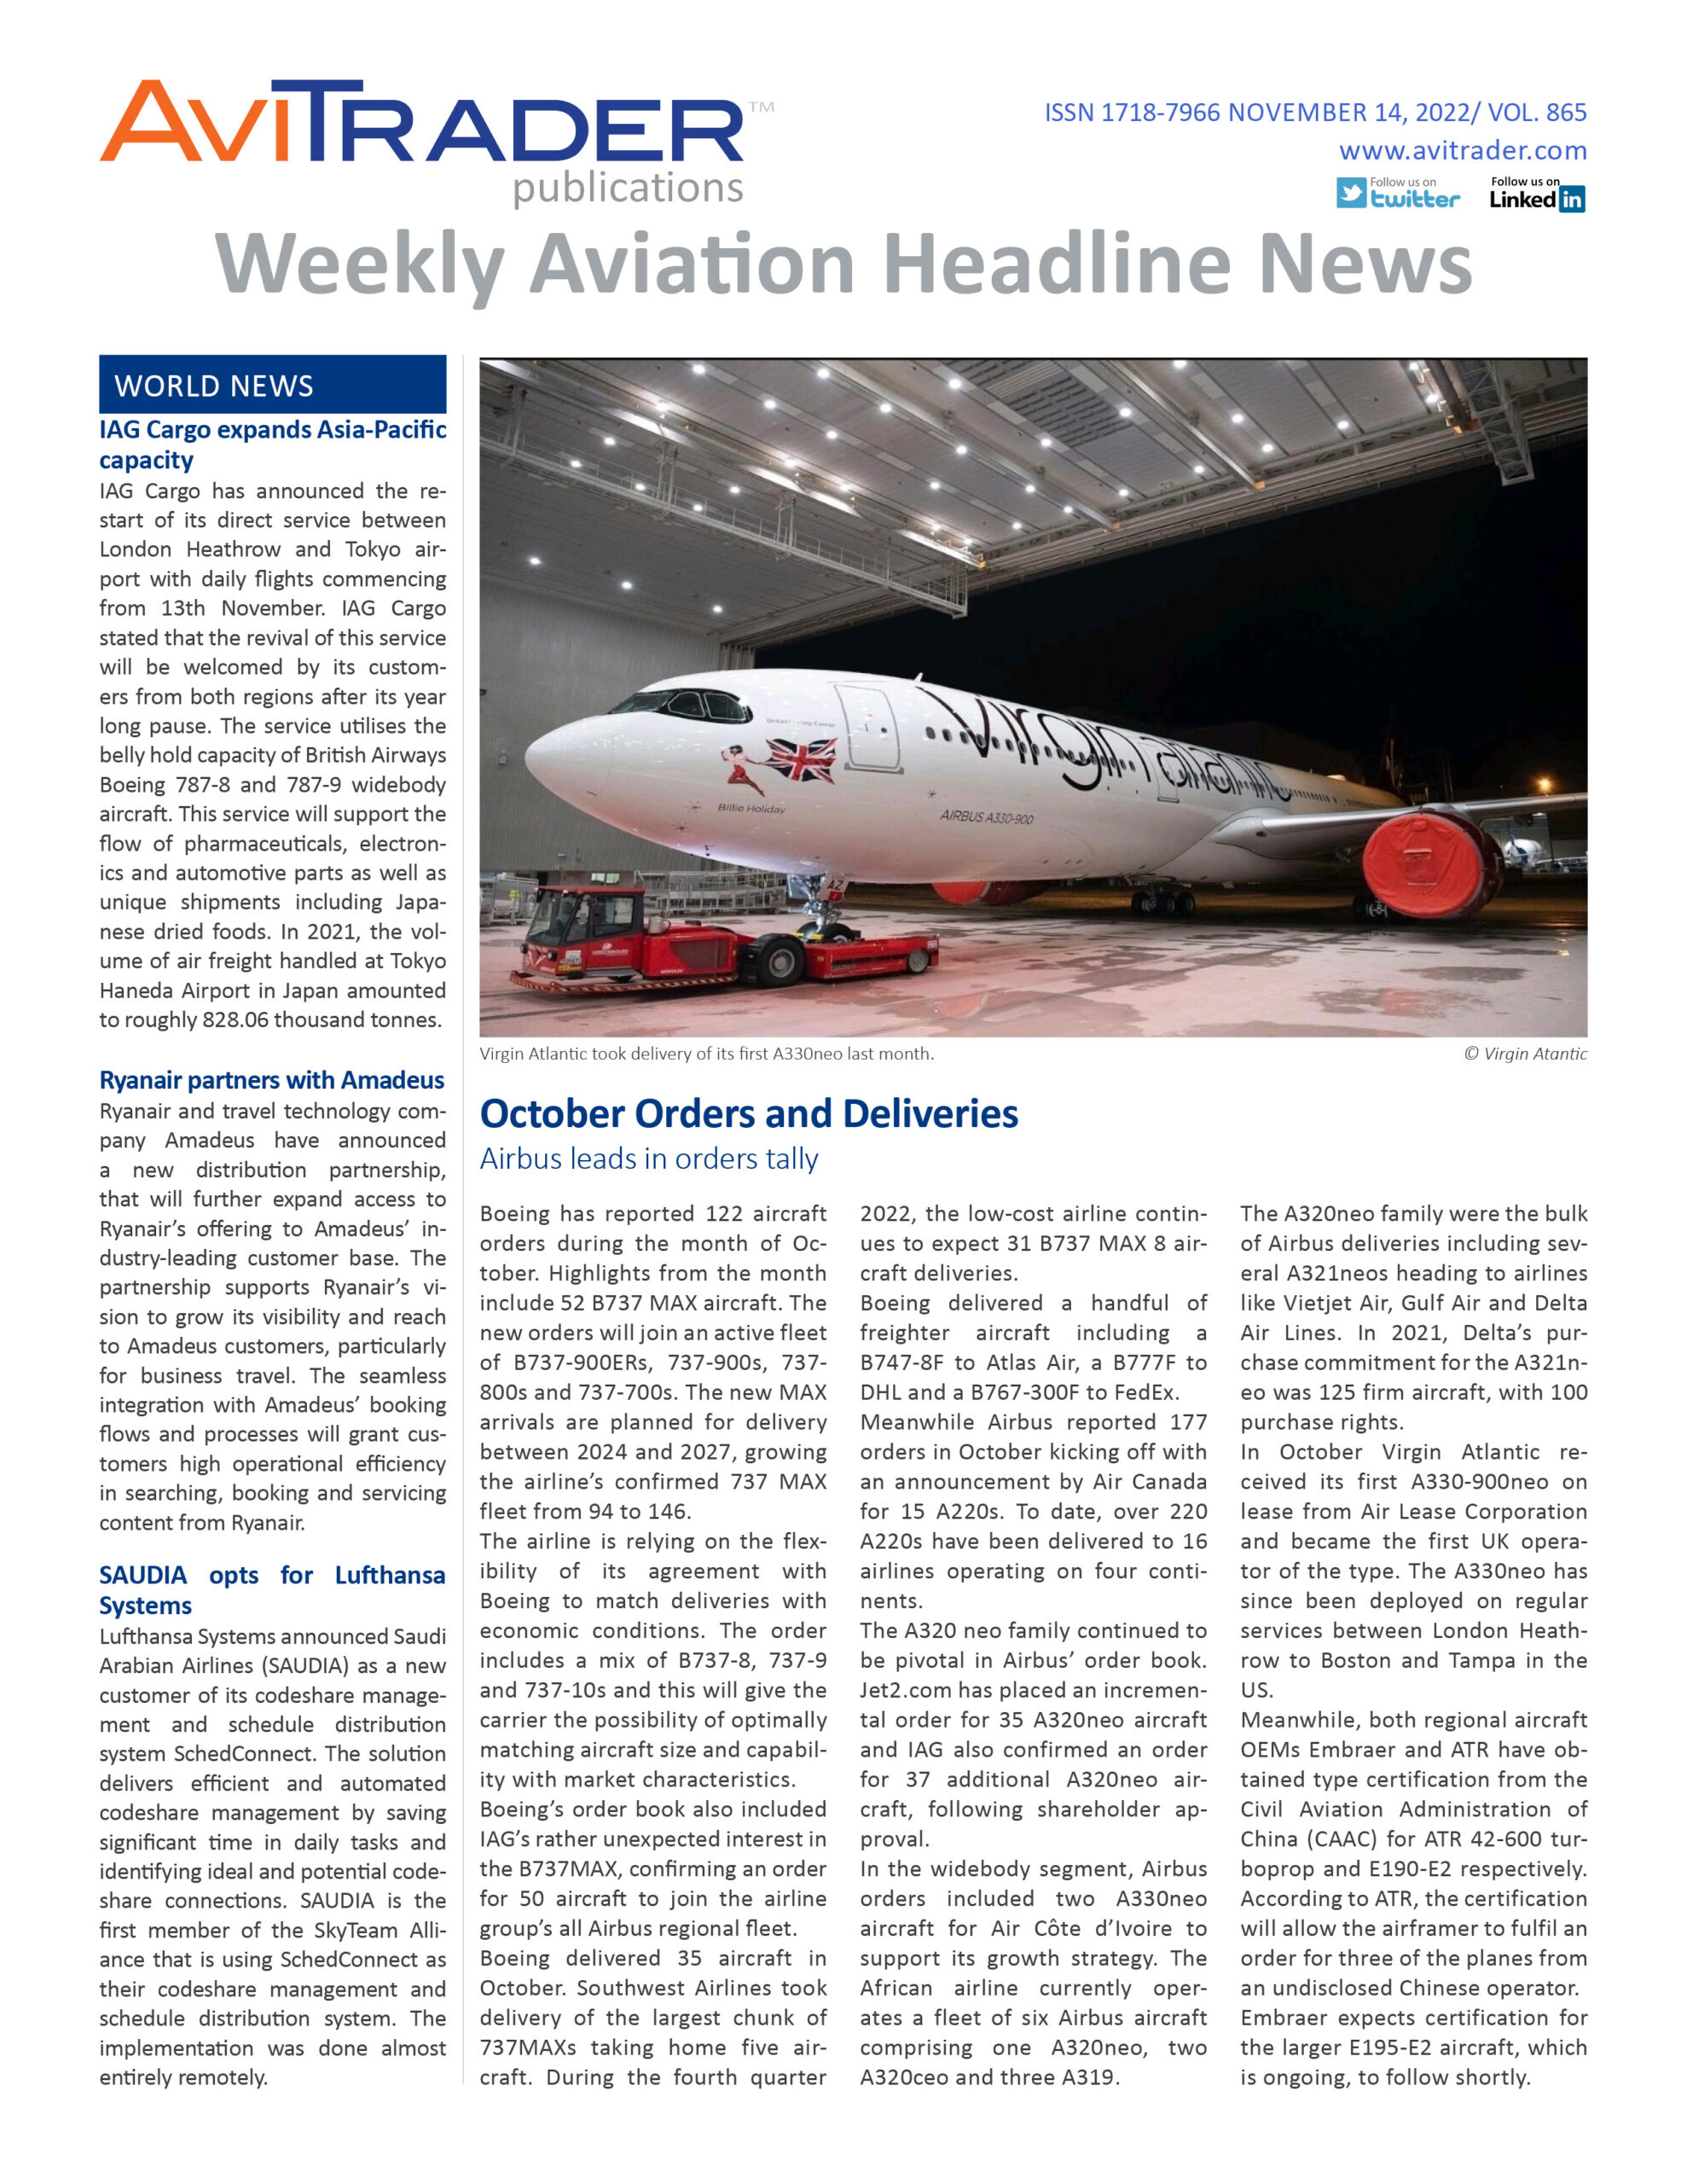 AviTrader_Weekly_Headline_News_Cover_2022-11-14